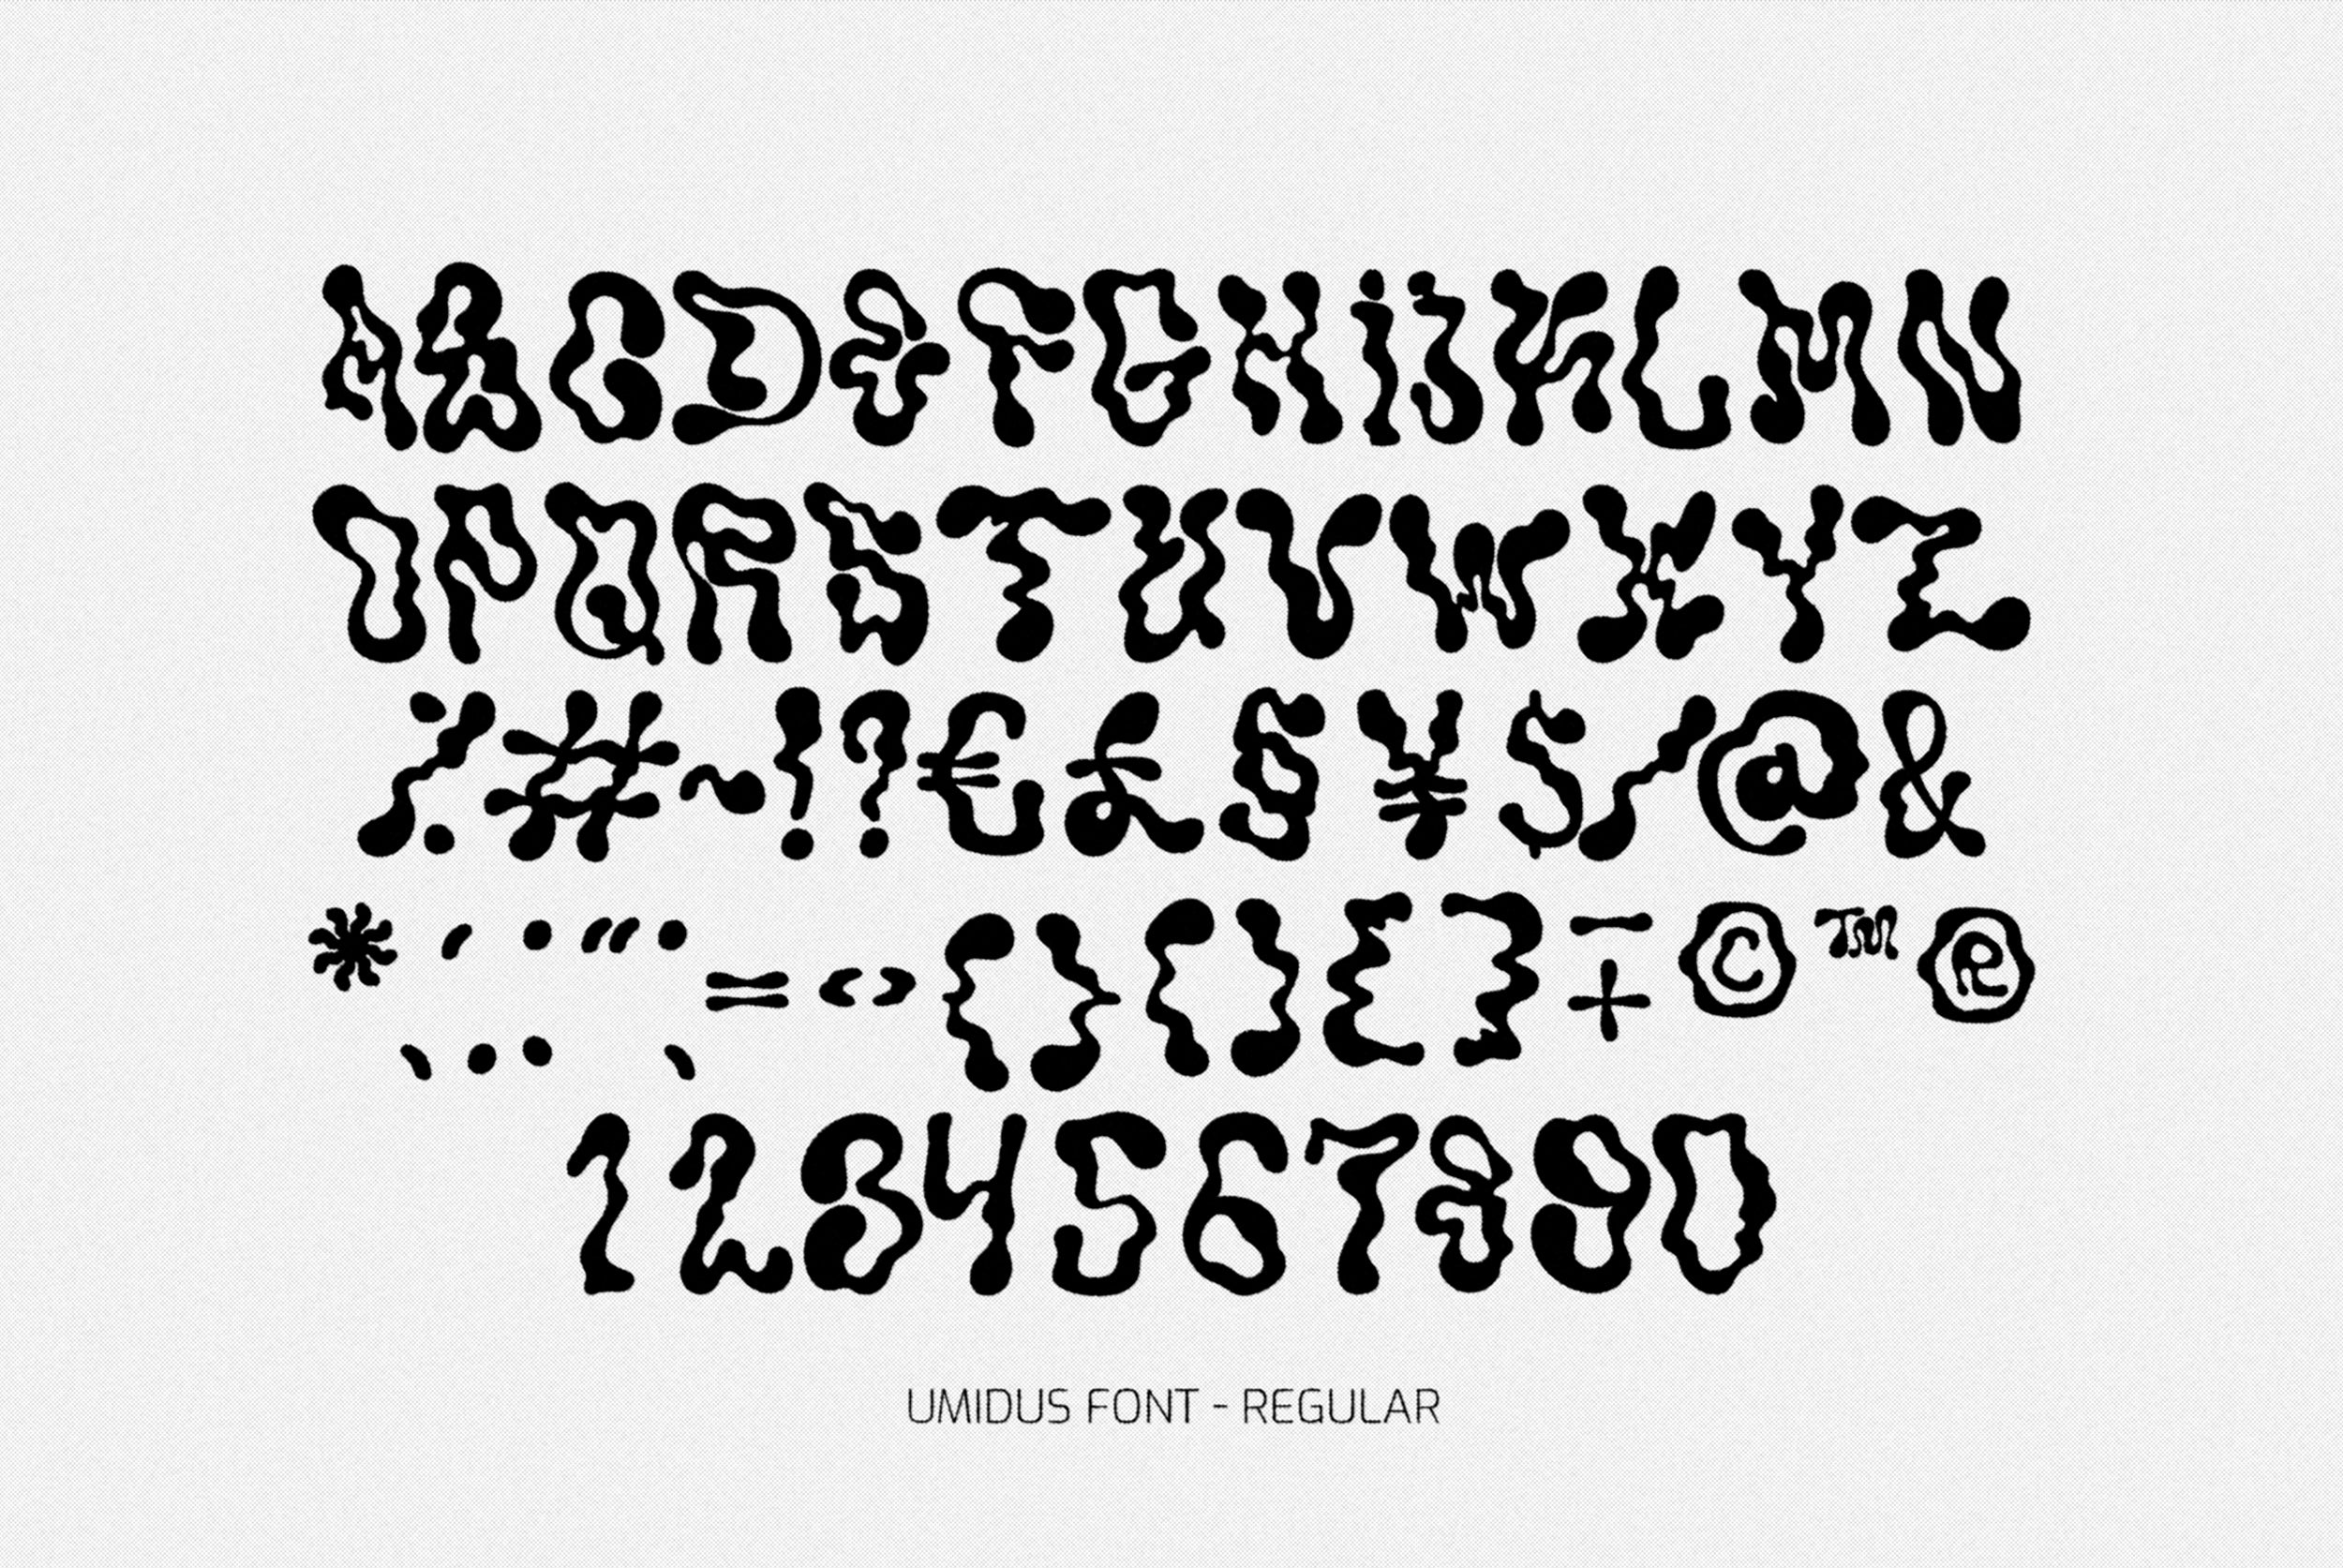 Umidus font - Trippy Liquid Font